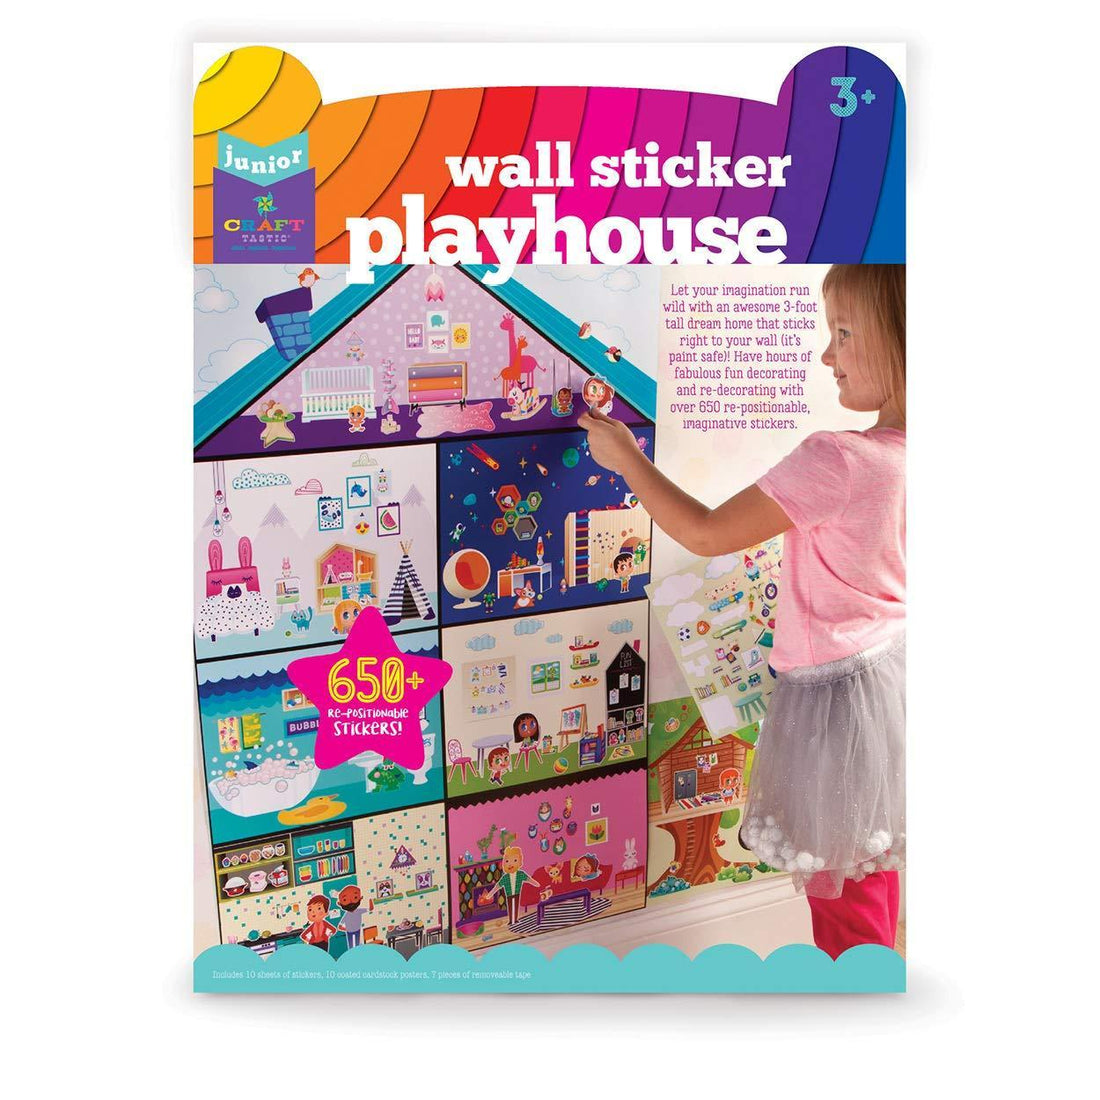 Wall Sticker Playhouse - Kitty Hawk Kites Online Store